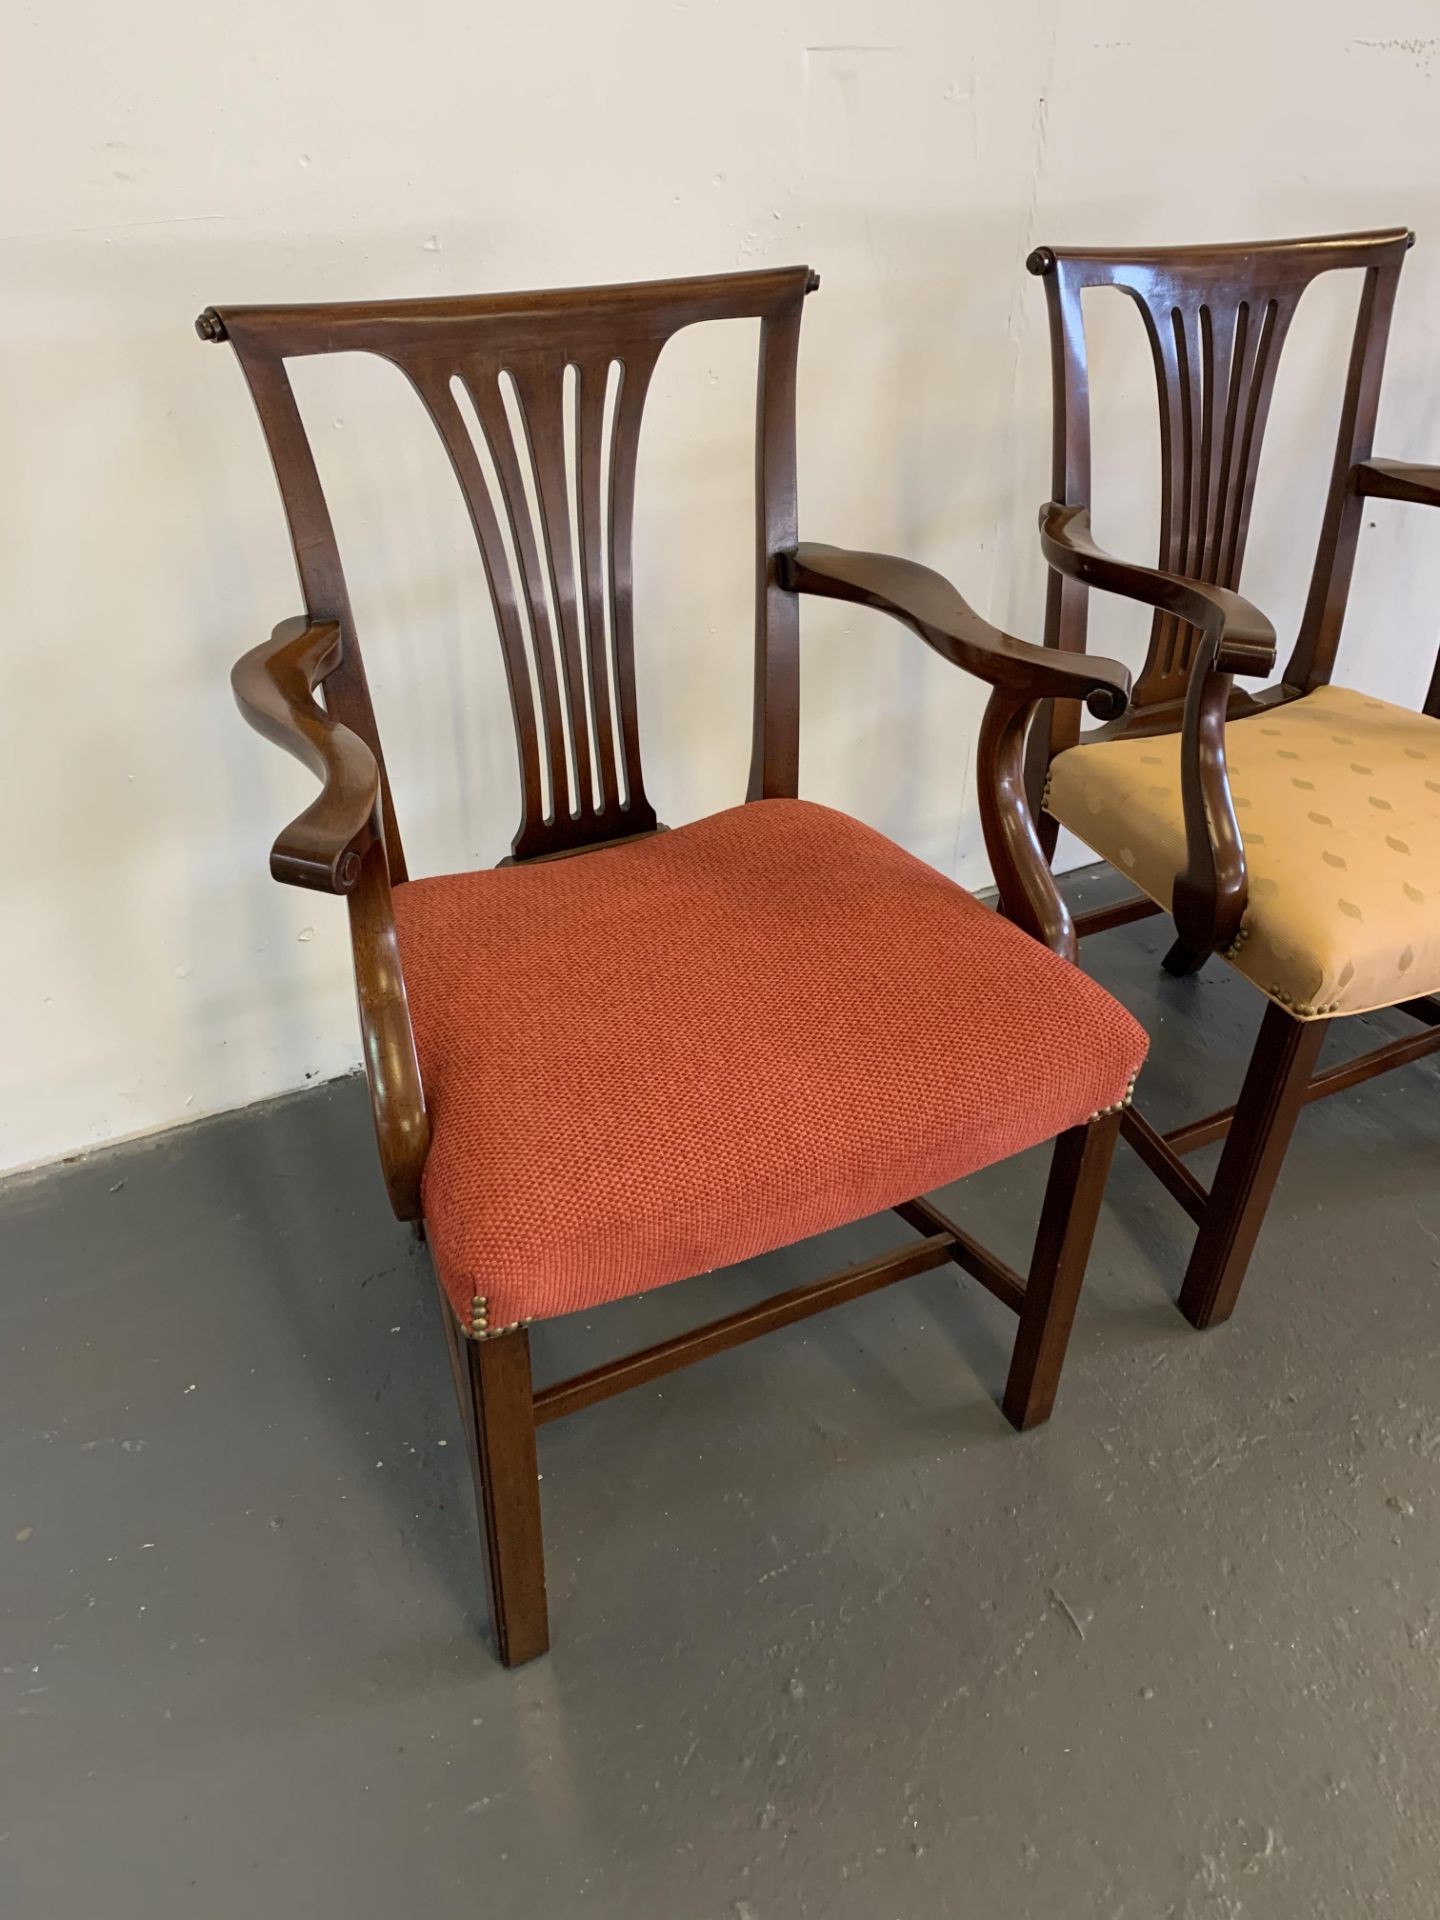 Arthur Brett Mahogany Arm Chair - Image 2 of 3